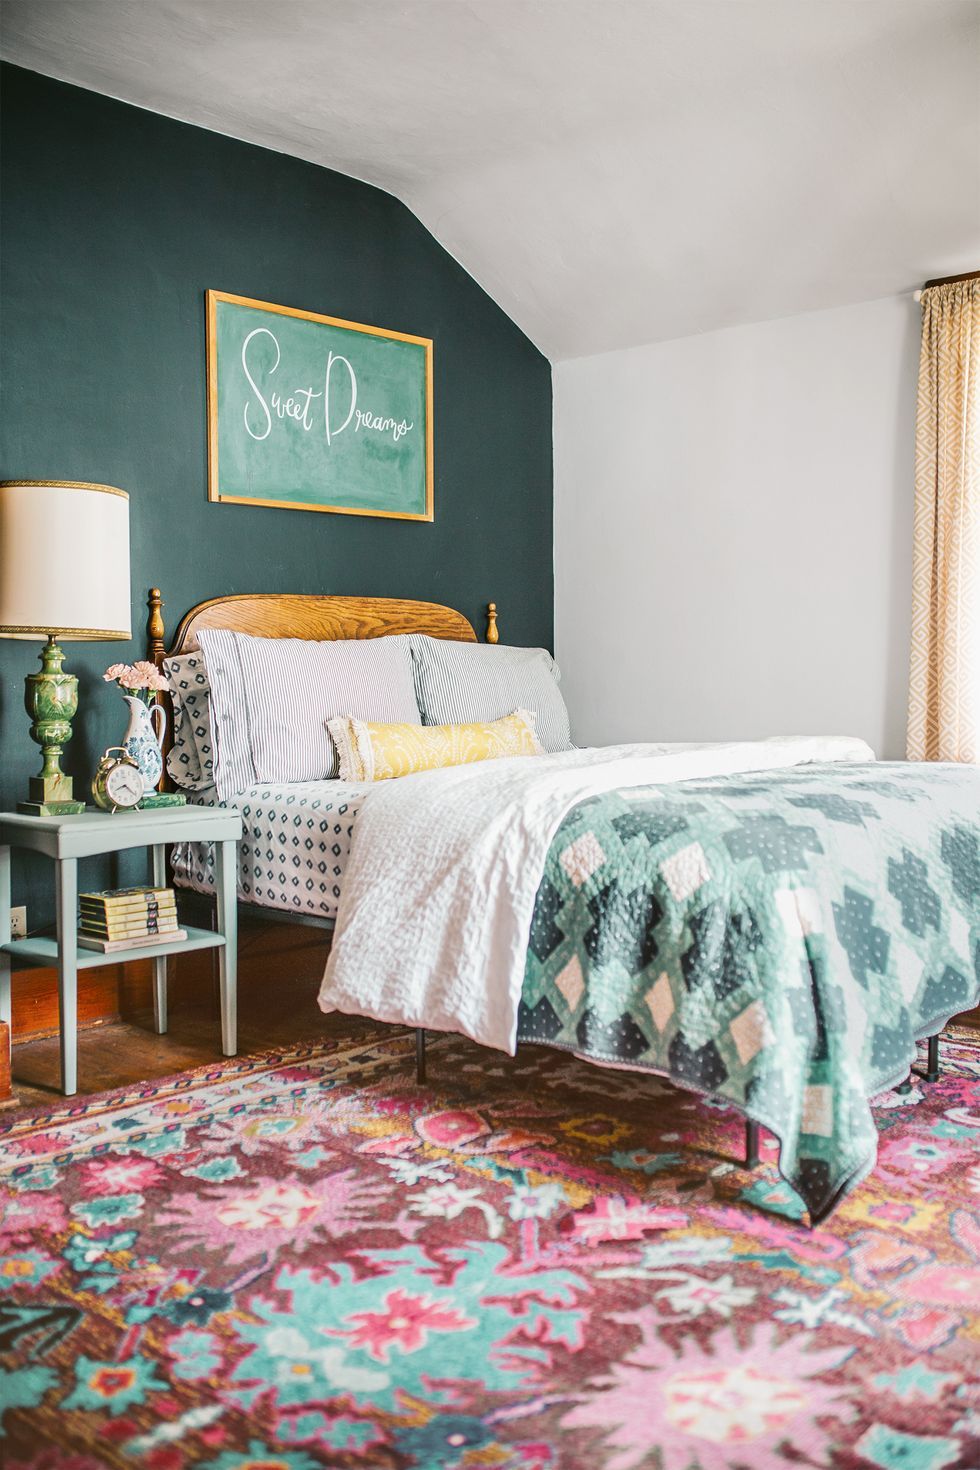 Top 10 master bedroom decor ideas for 2022 - Daily Dream Decor